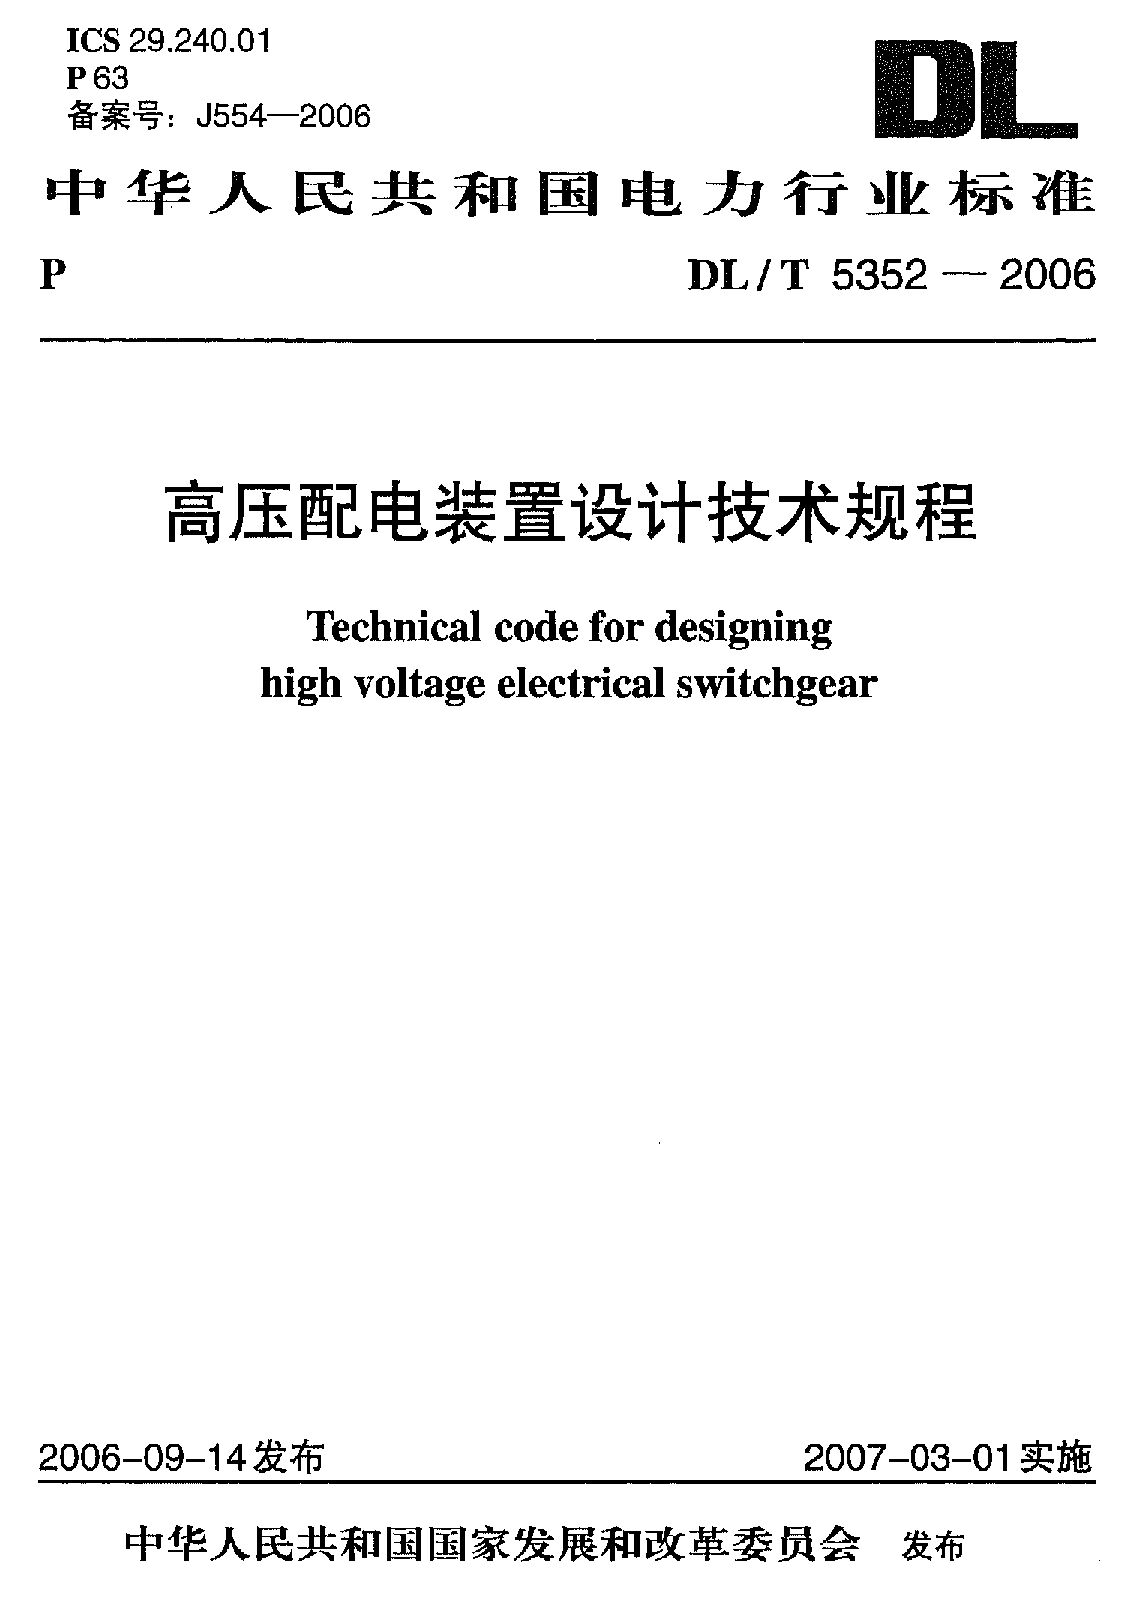 DL/T 5352-2006封面图